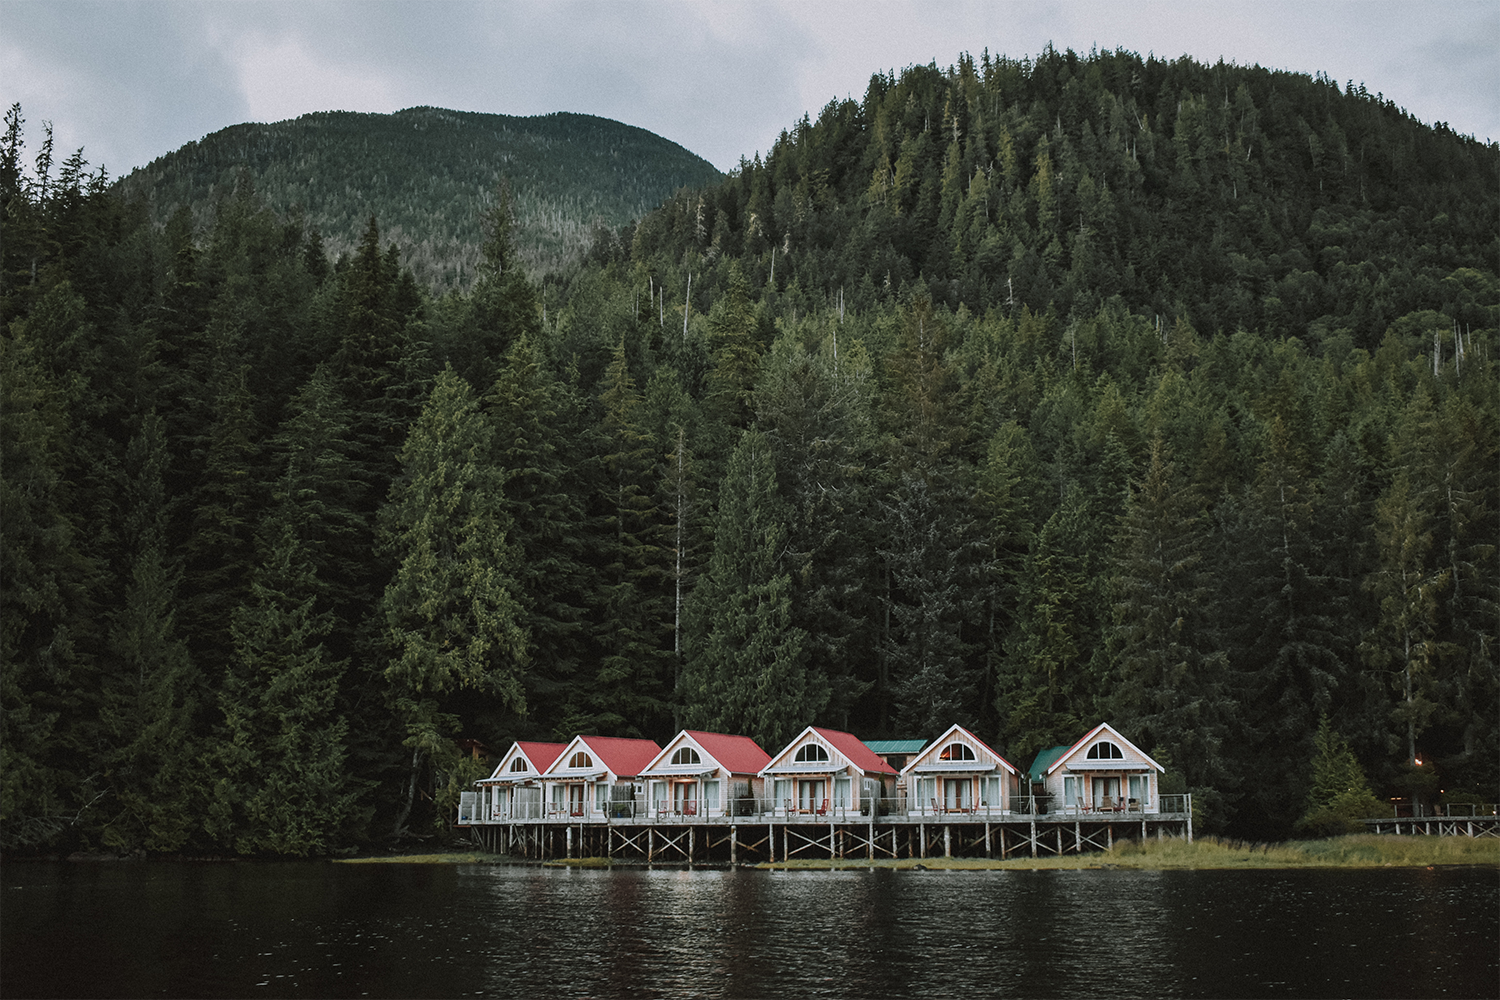 The cabins at Nimmo Bay, British Columbia, a remote luxury destination in Canada